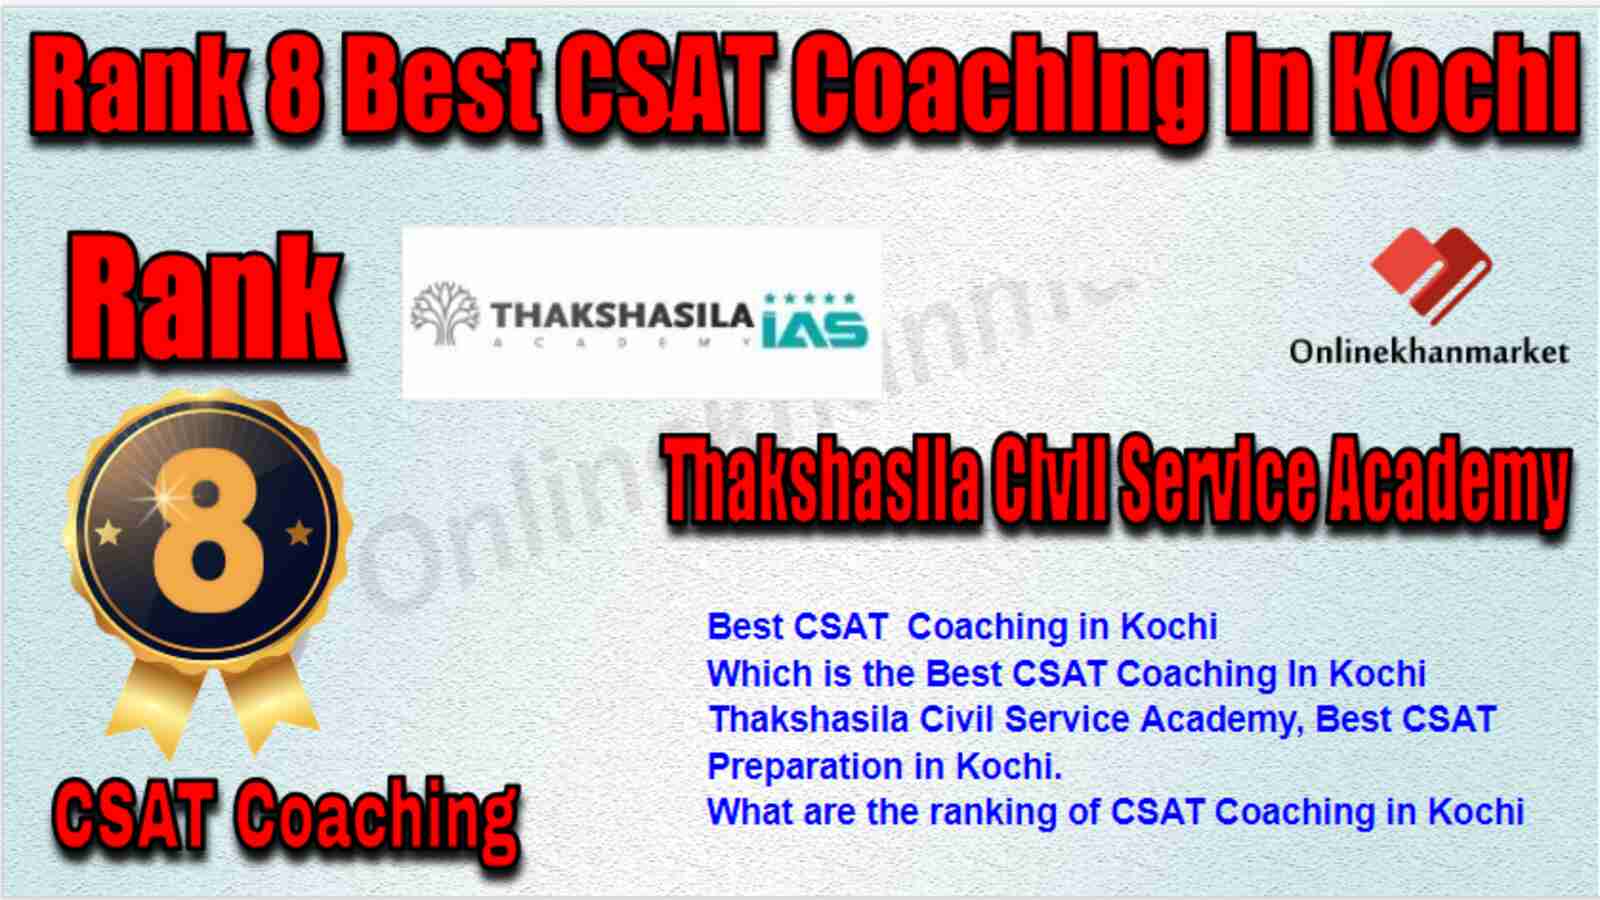 Rank 8 Best CSAT Coaching in Kochi